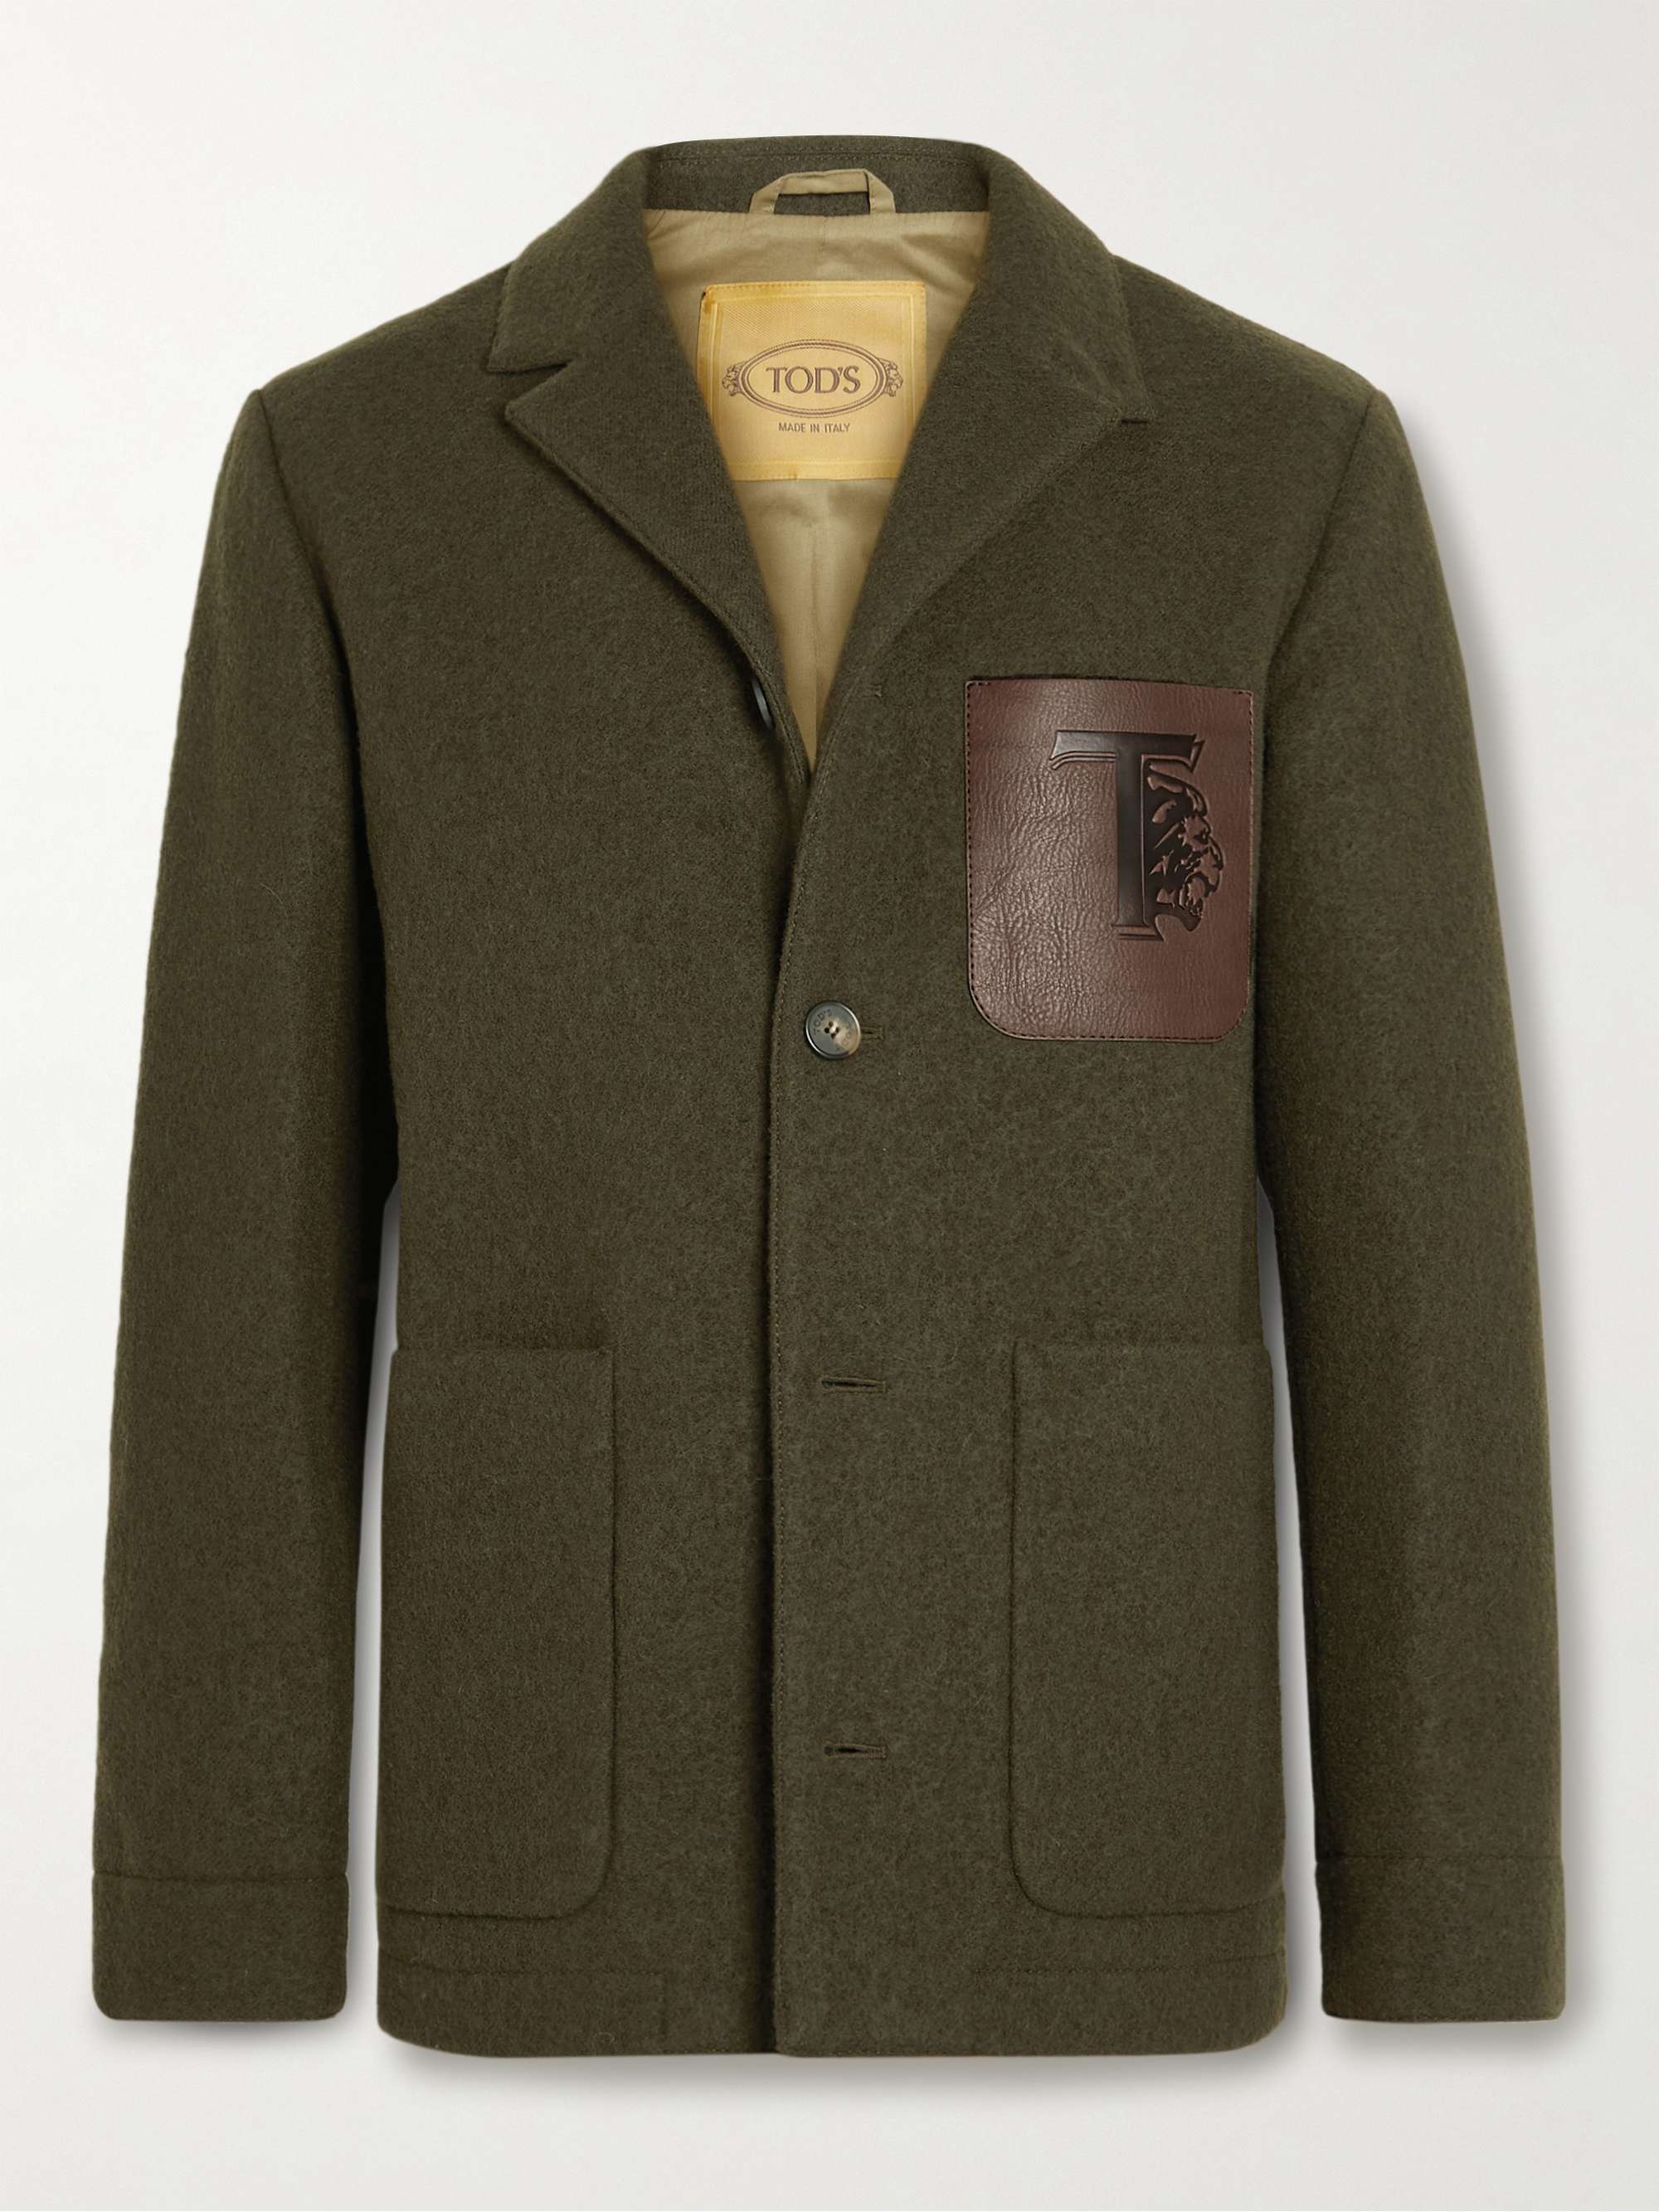 TOD'S Logo-Debossed Leather-Trimmed Shetland Wool Blazer